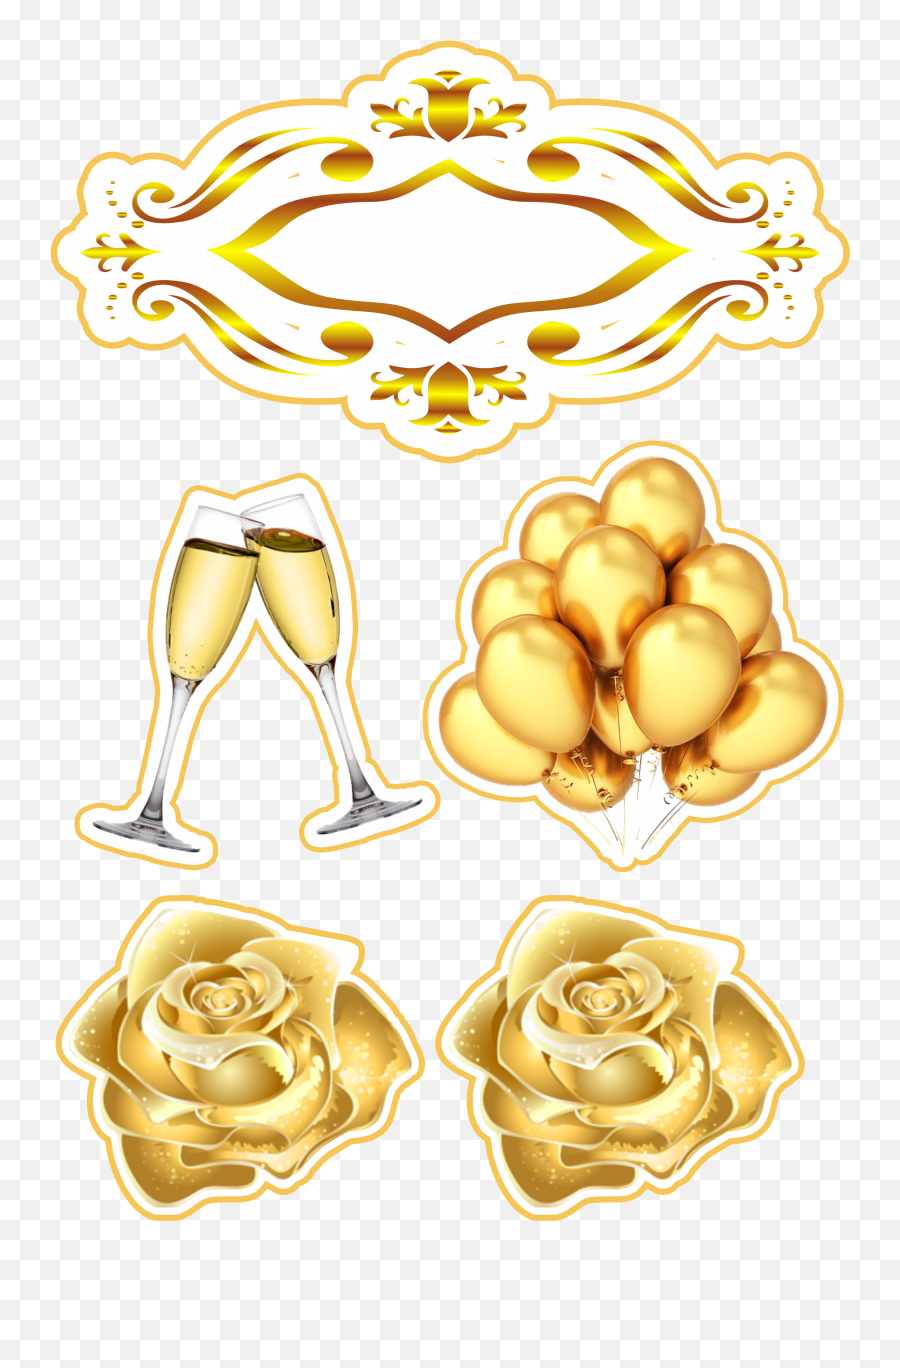 24 Alcohol Topper Ideas In 2021 Topper Alcohol Jack - Topo De Bolo Dourado Para Imprimir Emoji,Emoji Cake Kit